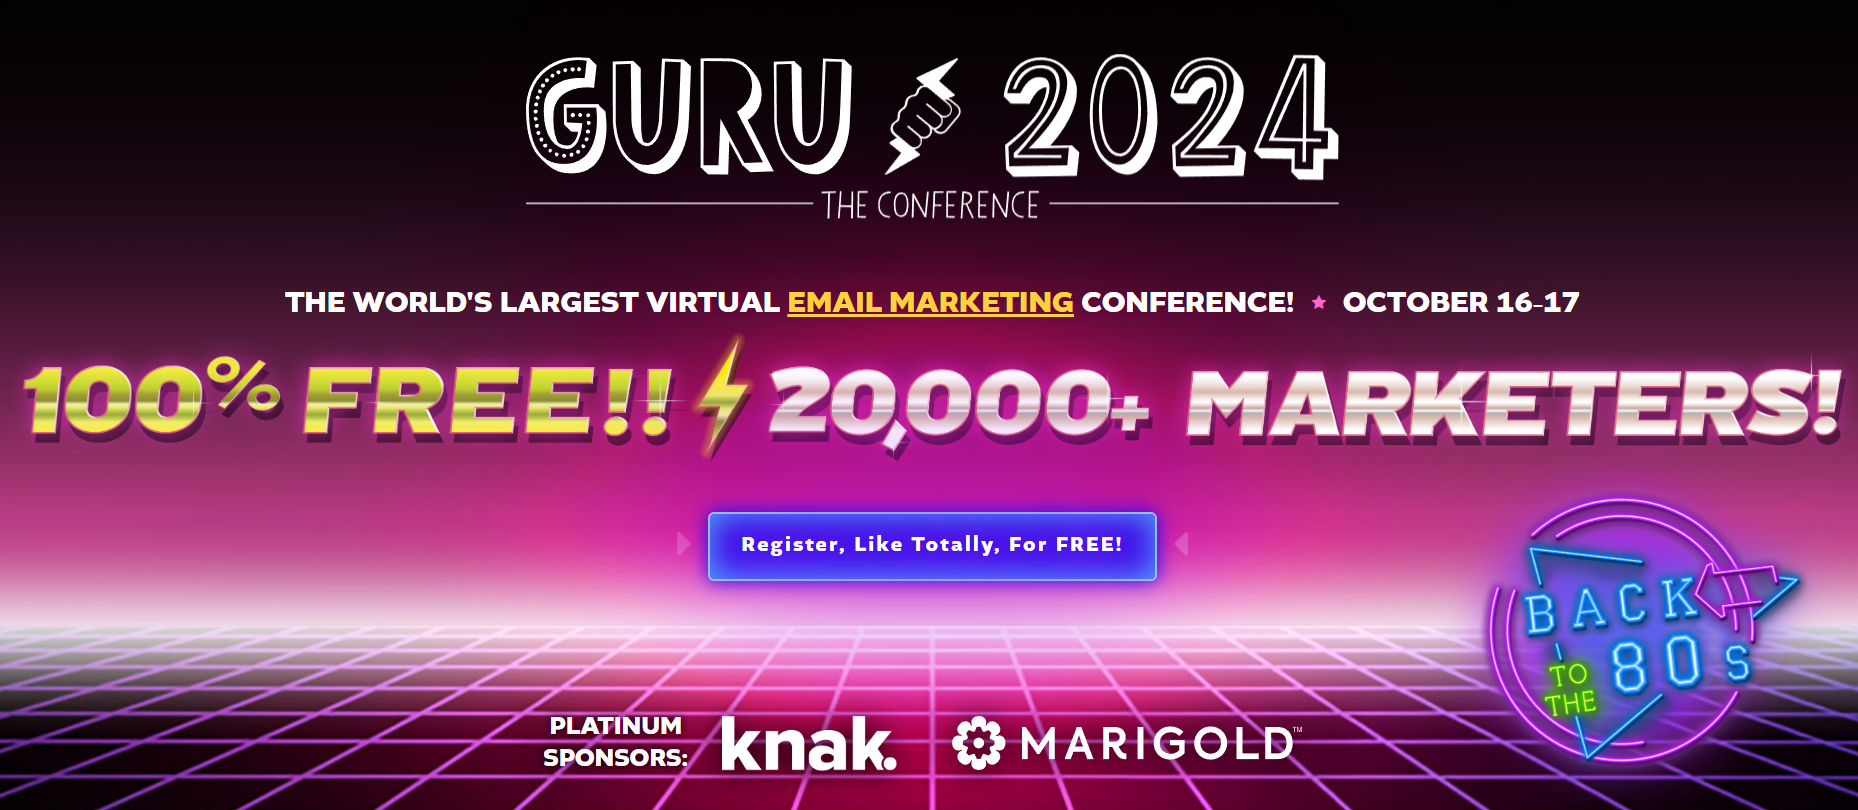 The GURU Conference _ ТОП заходів у сфері email-маркетингу